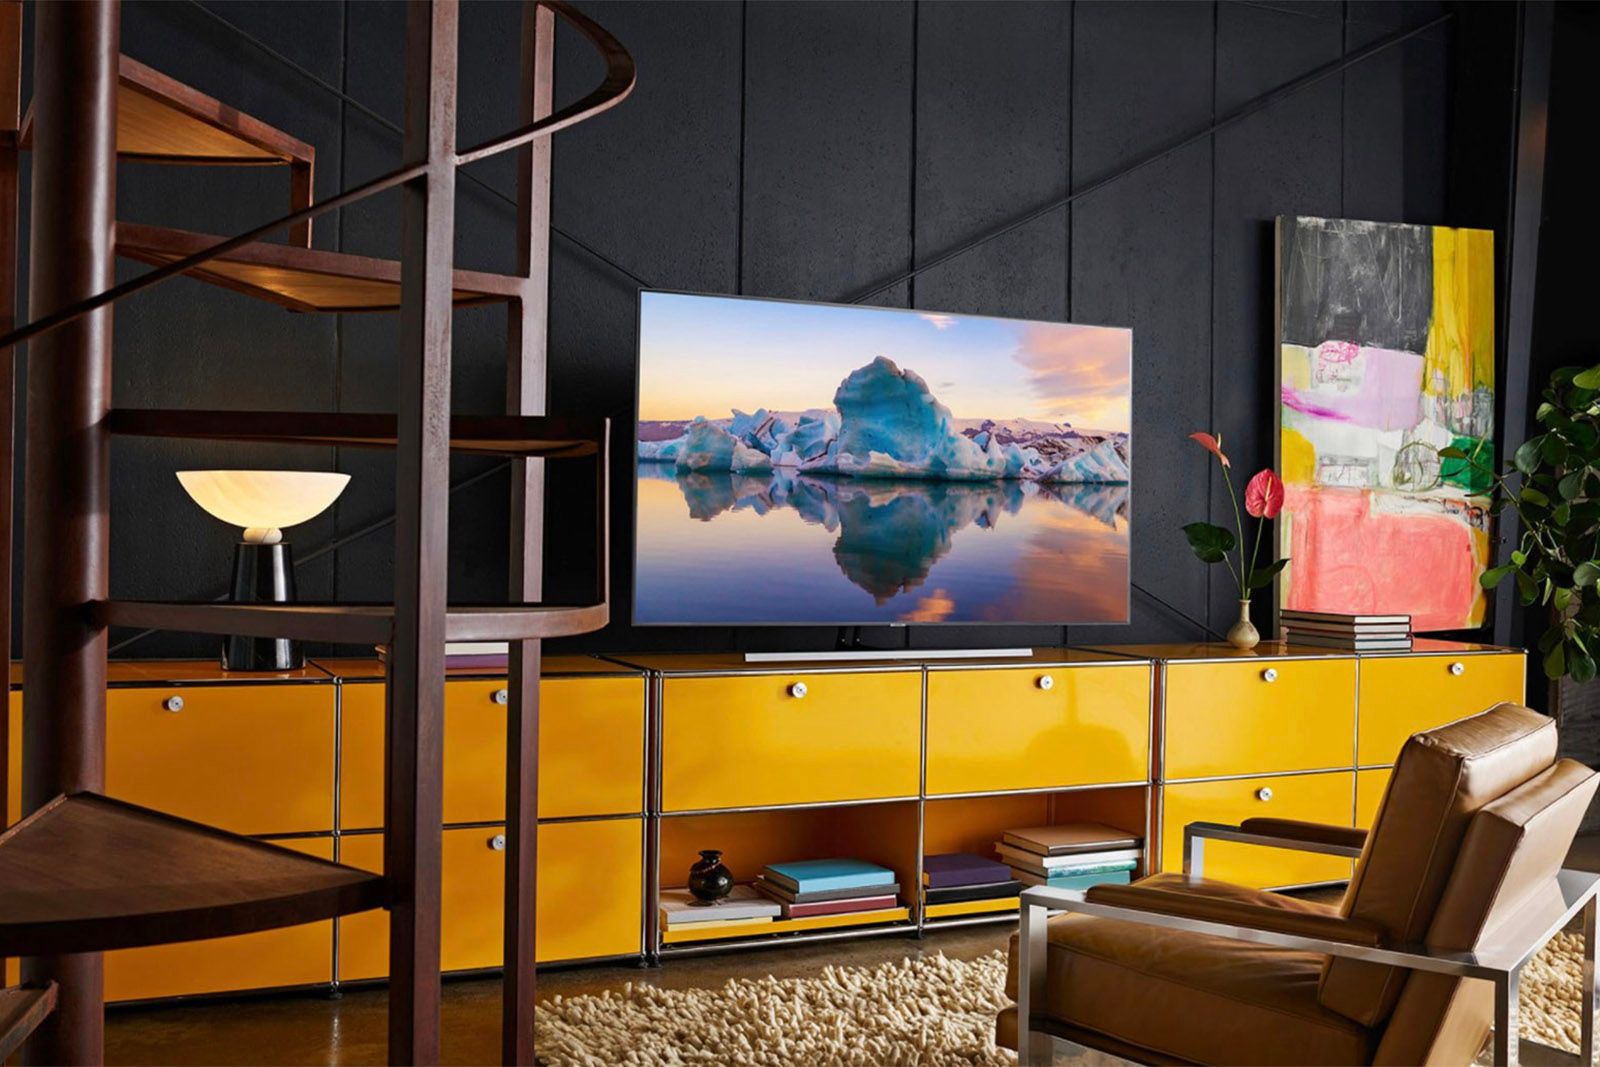 Samsung Q85R 4K TV review image 1